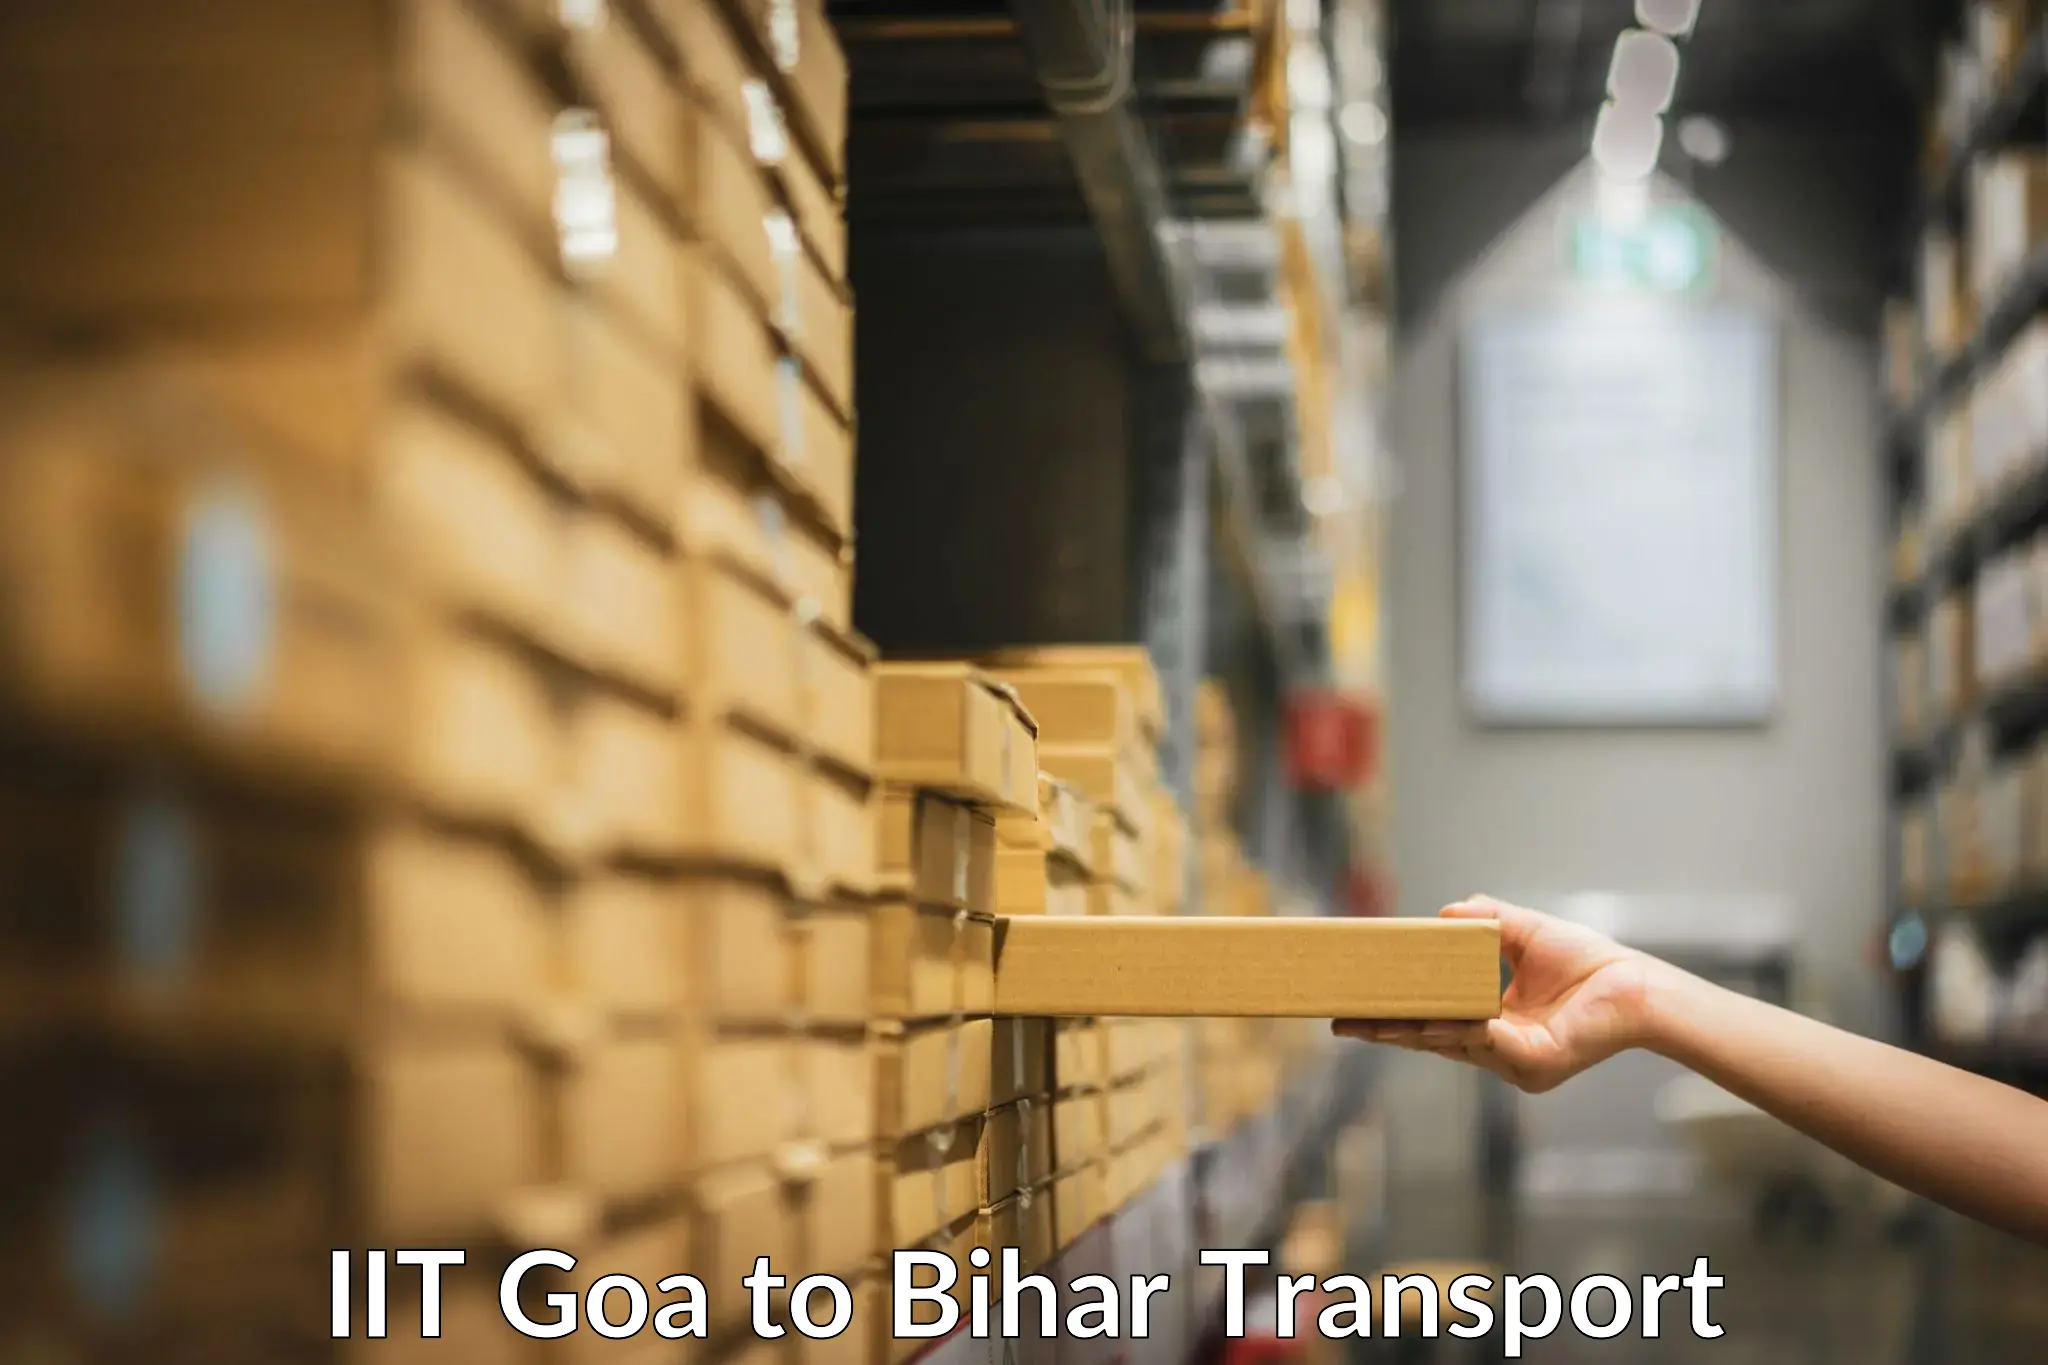 Bike shipping service IIT Goa to Kumarkhand